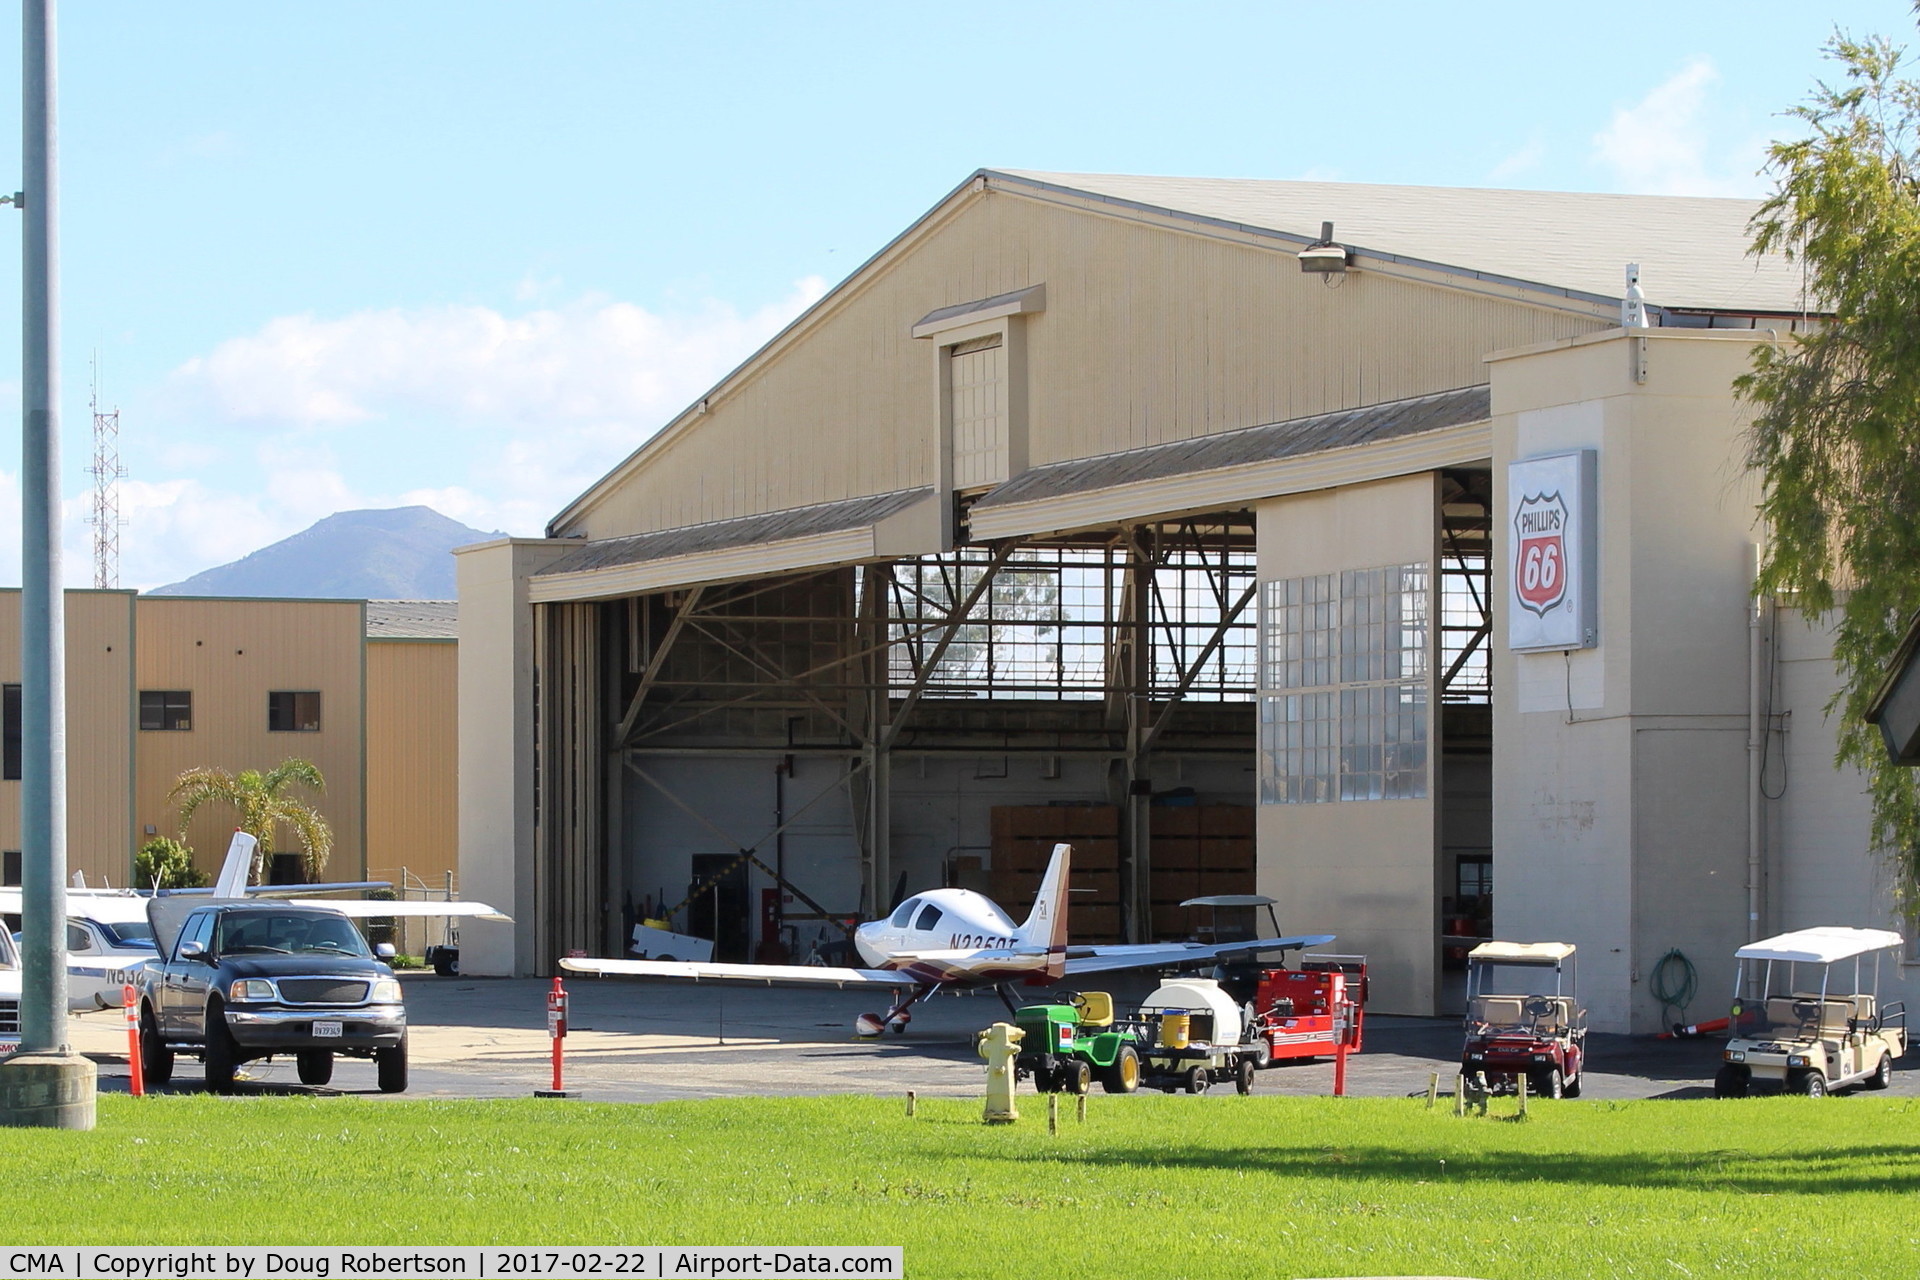 Camarillo Airport (CMA) - Channel Islands Aviation Cessna Dealer main maintenance hanger. Was an Oxnard Air Force Base hanger prior to 1971.